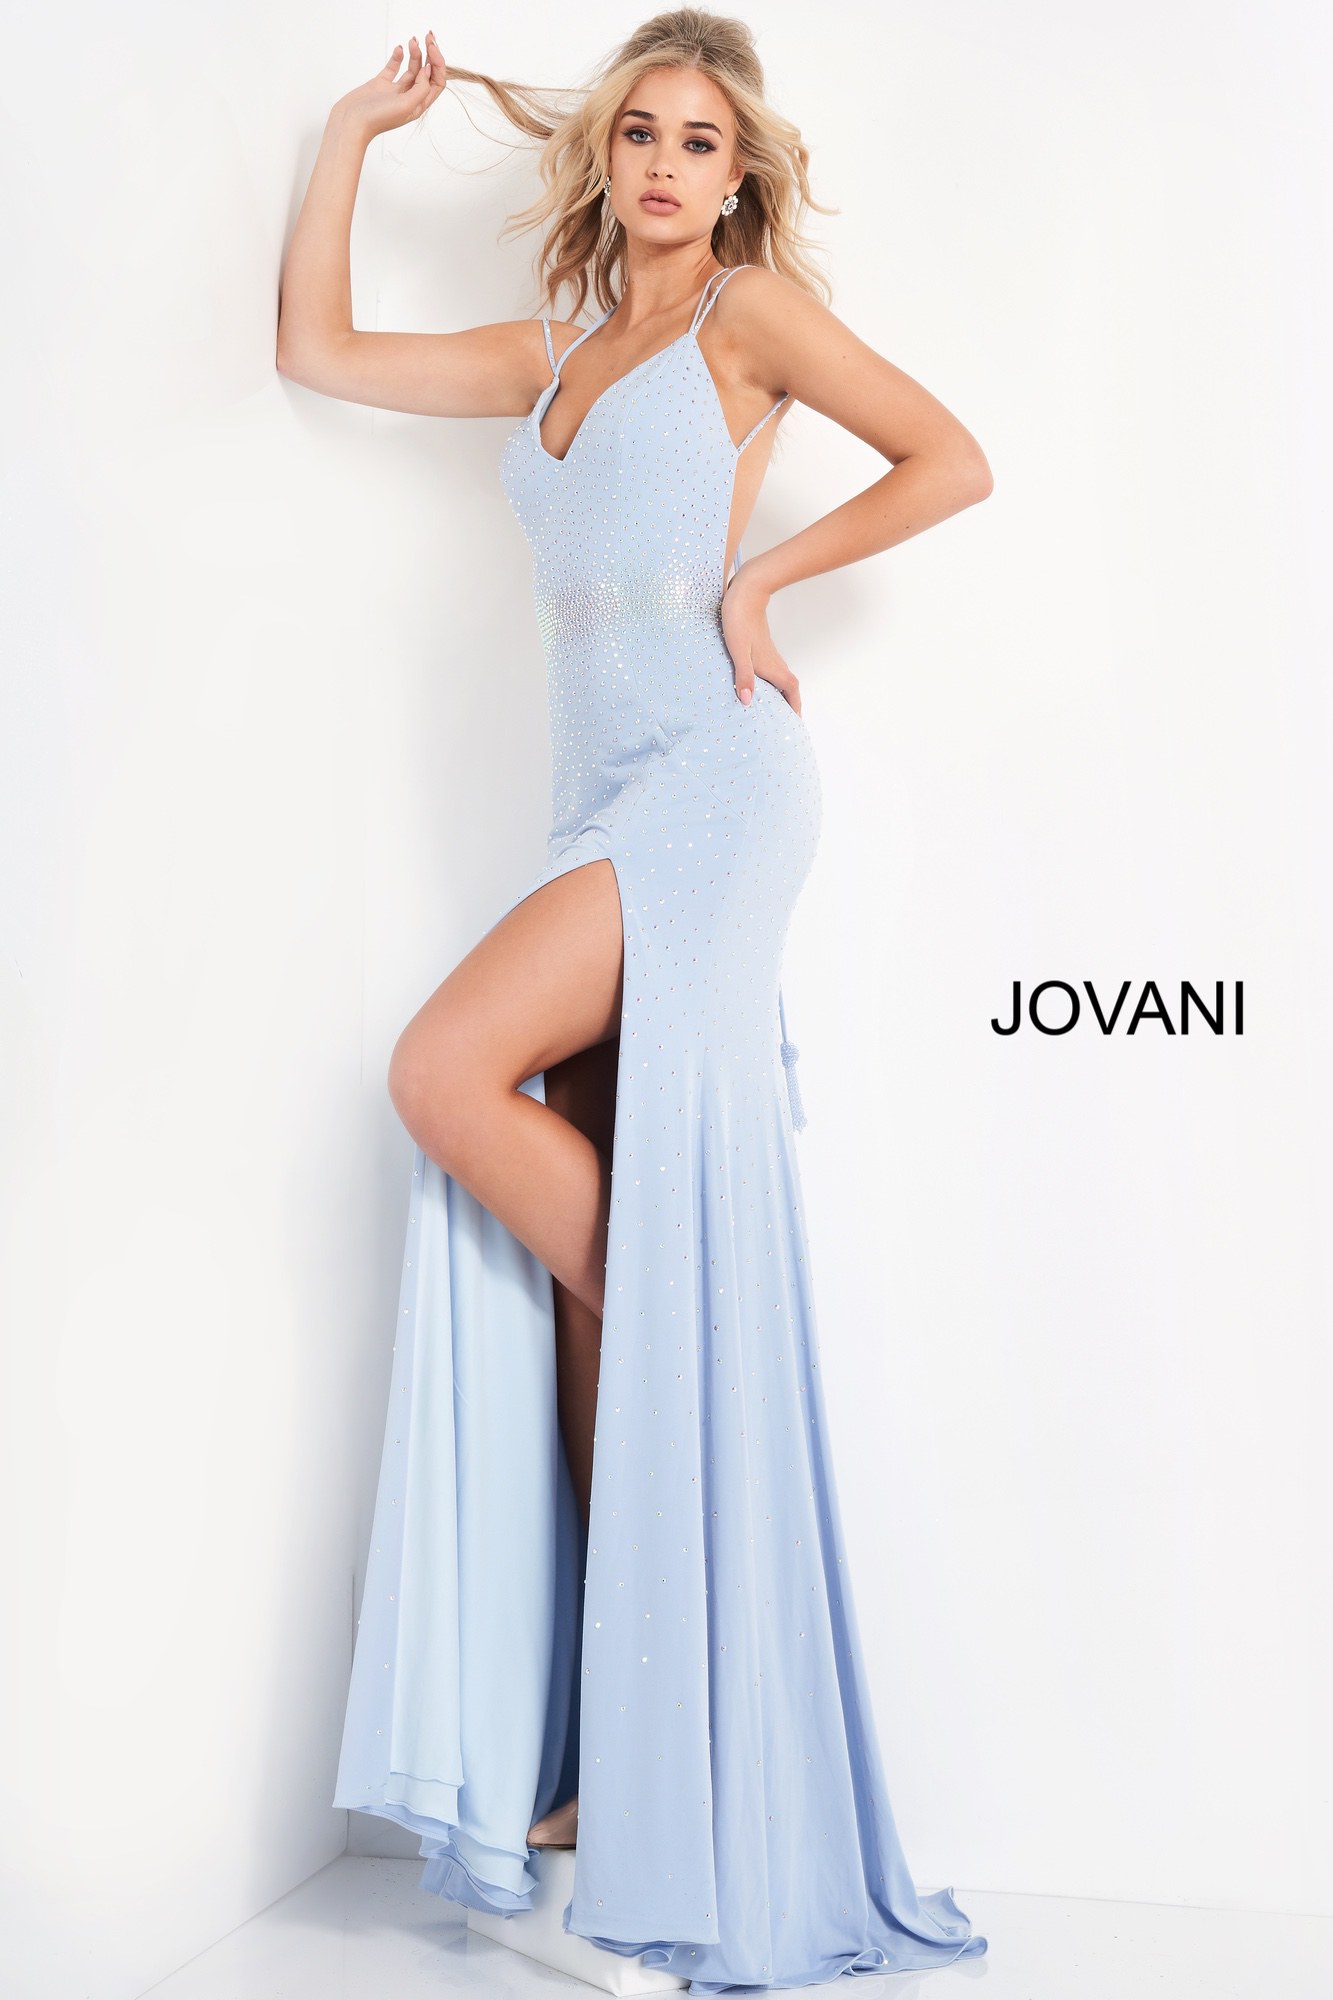 Jovani 06209 | Light Blue Backless Fitted Prom Dress